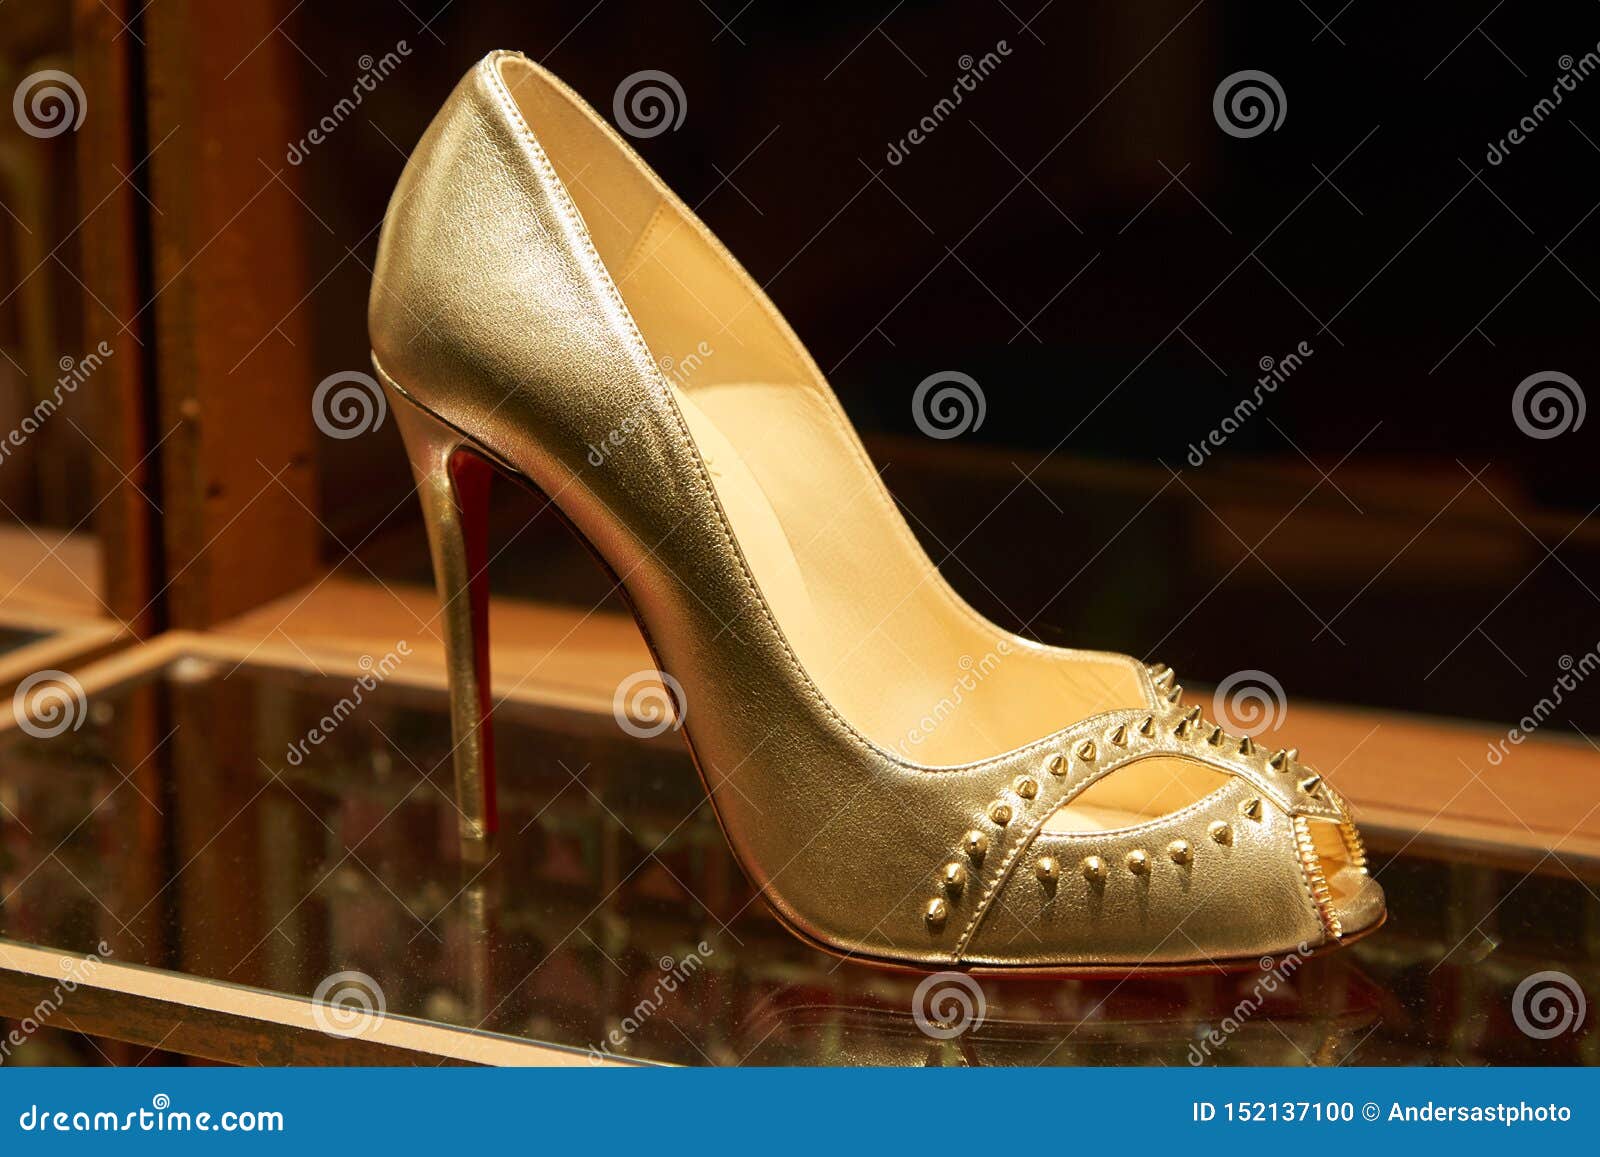 Christian Louboutin Bridal Shoes